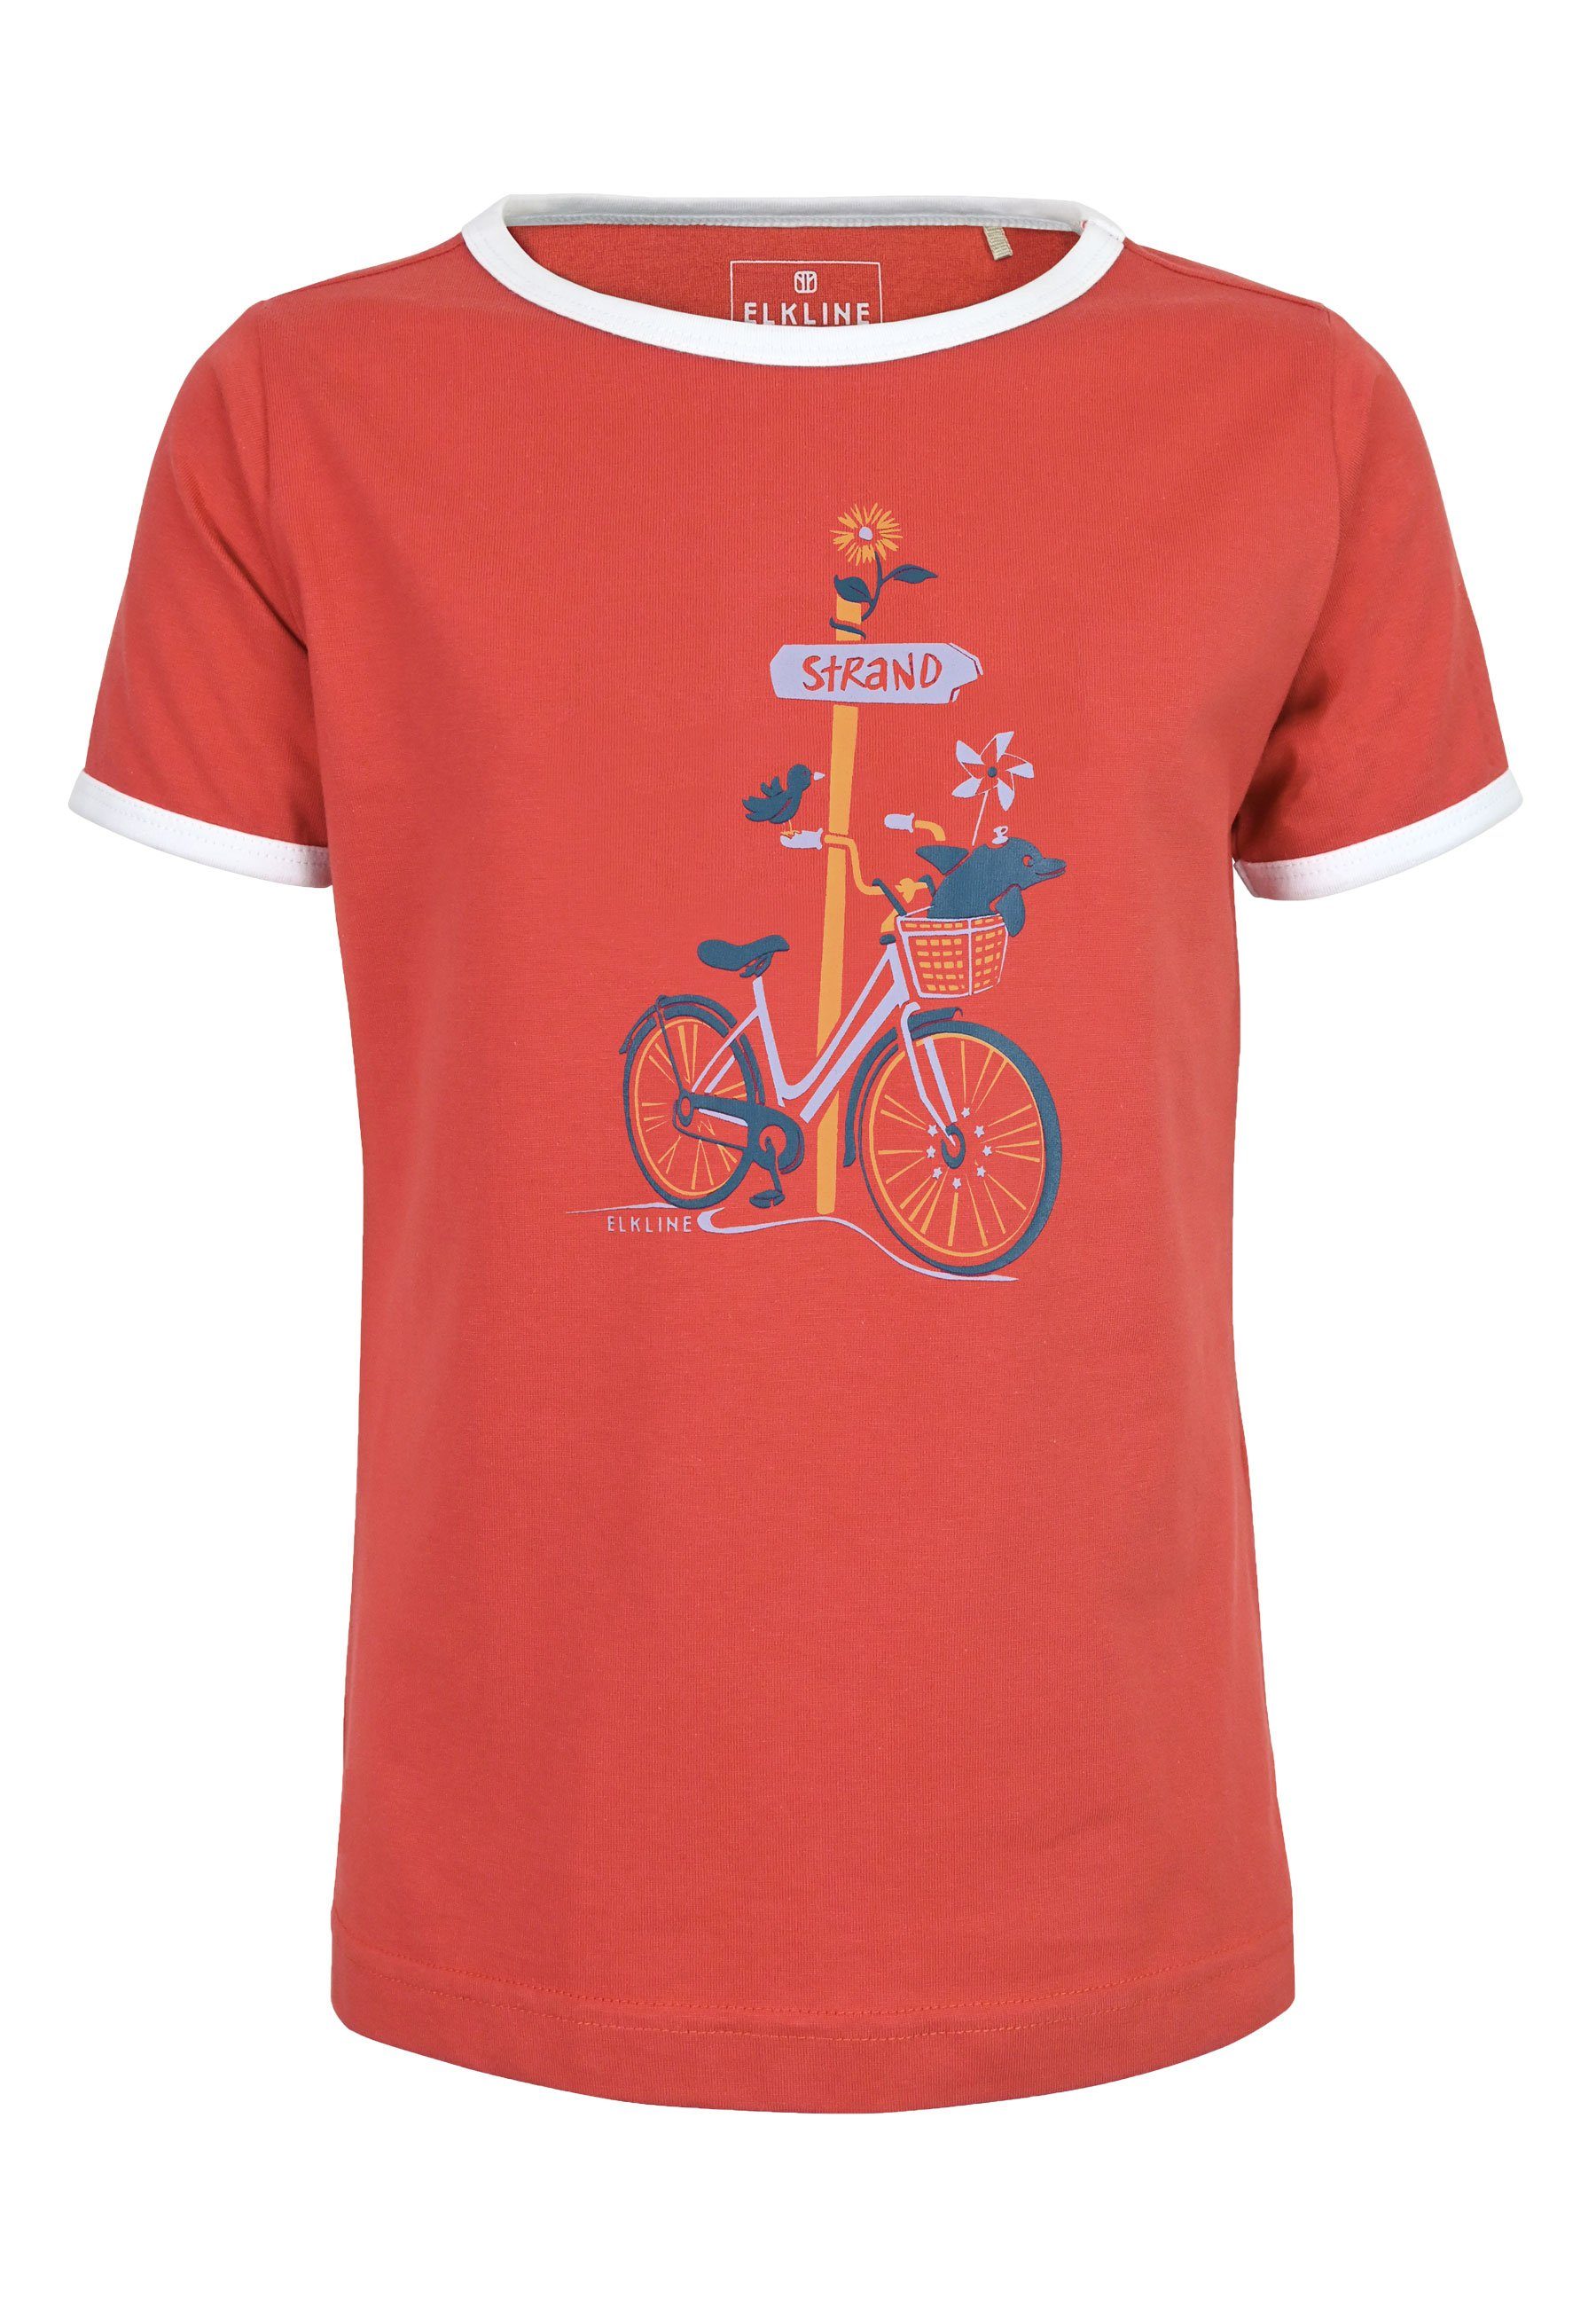 Print T-Shirt Strand mandarin Fahrrad Zum tailliert leicht Elkline Brust